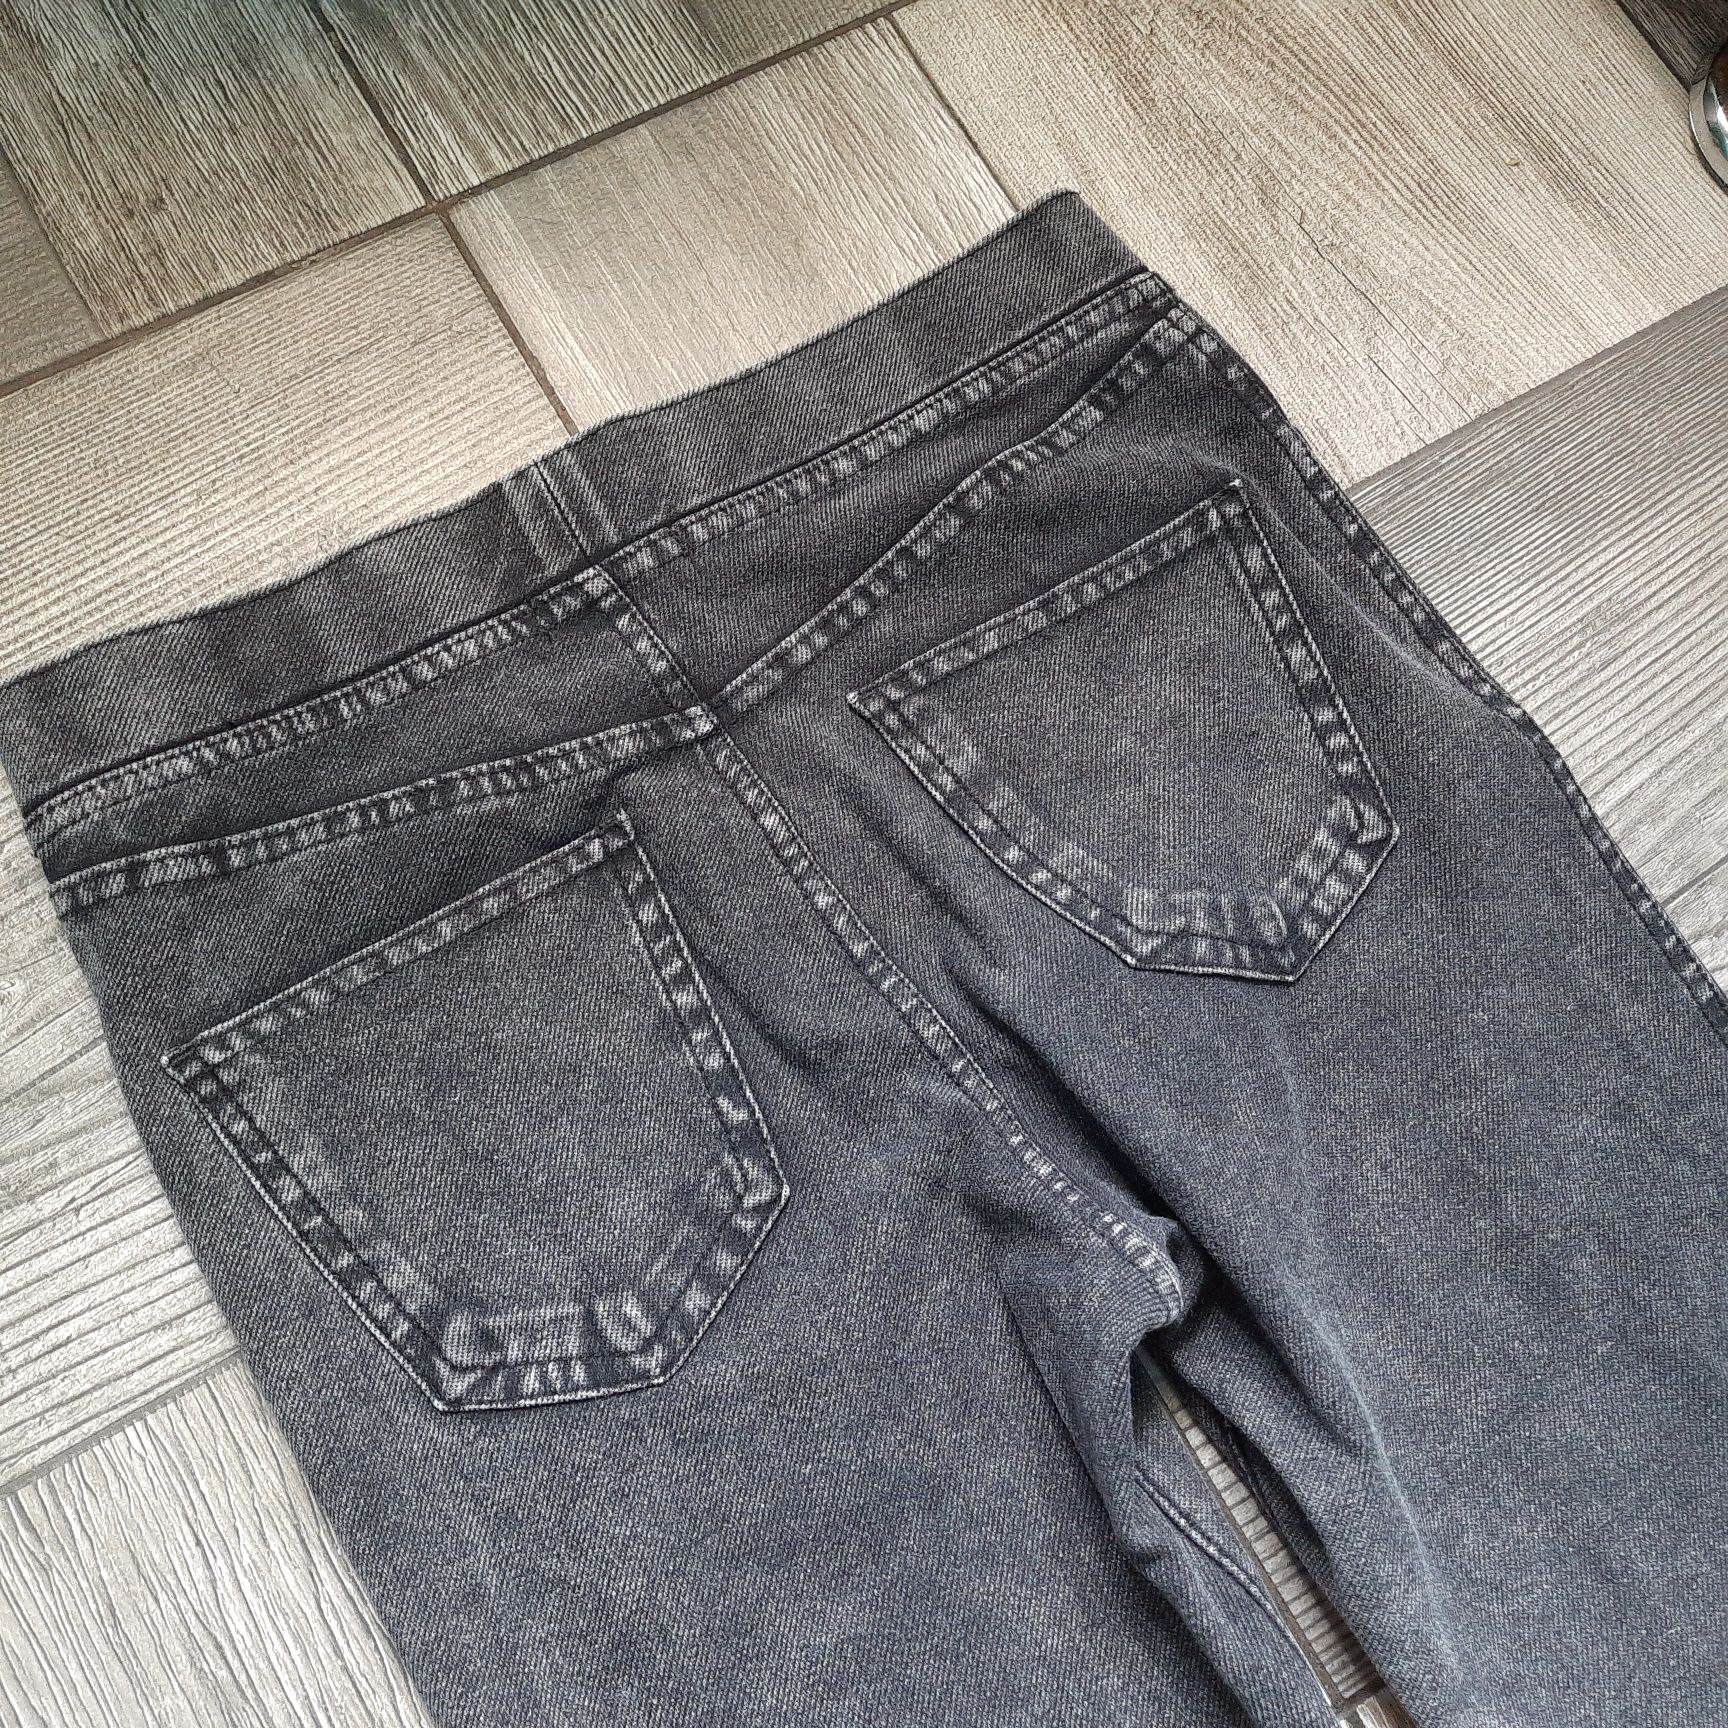 Легенькі сірі джеггінси,джинси H&M.Легкие джеггинсы,джинсы